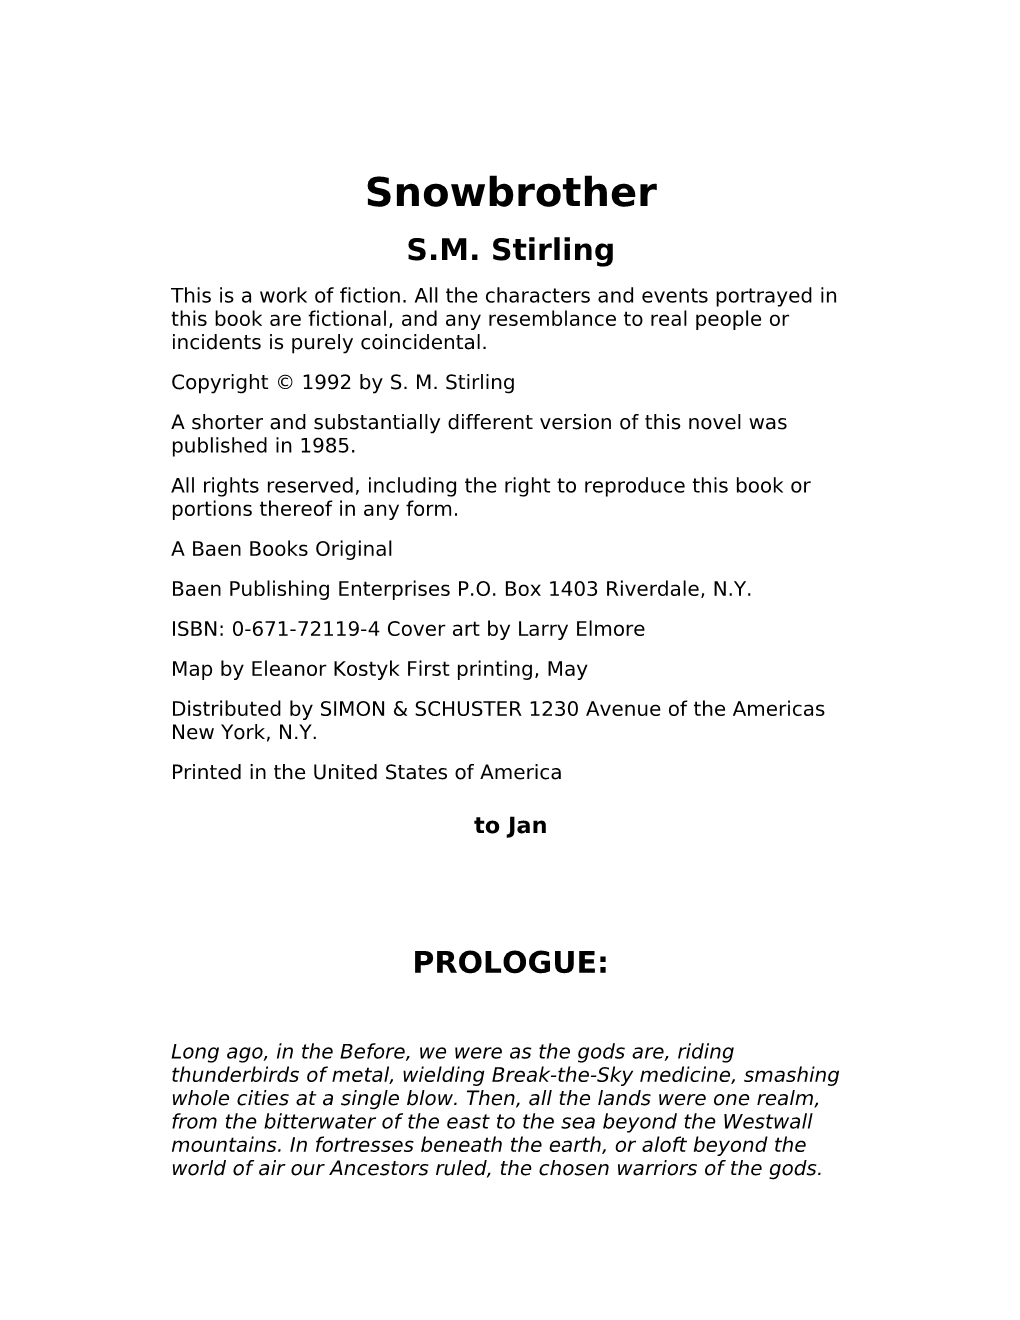 Snowbrother S.M